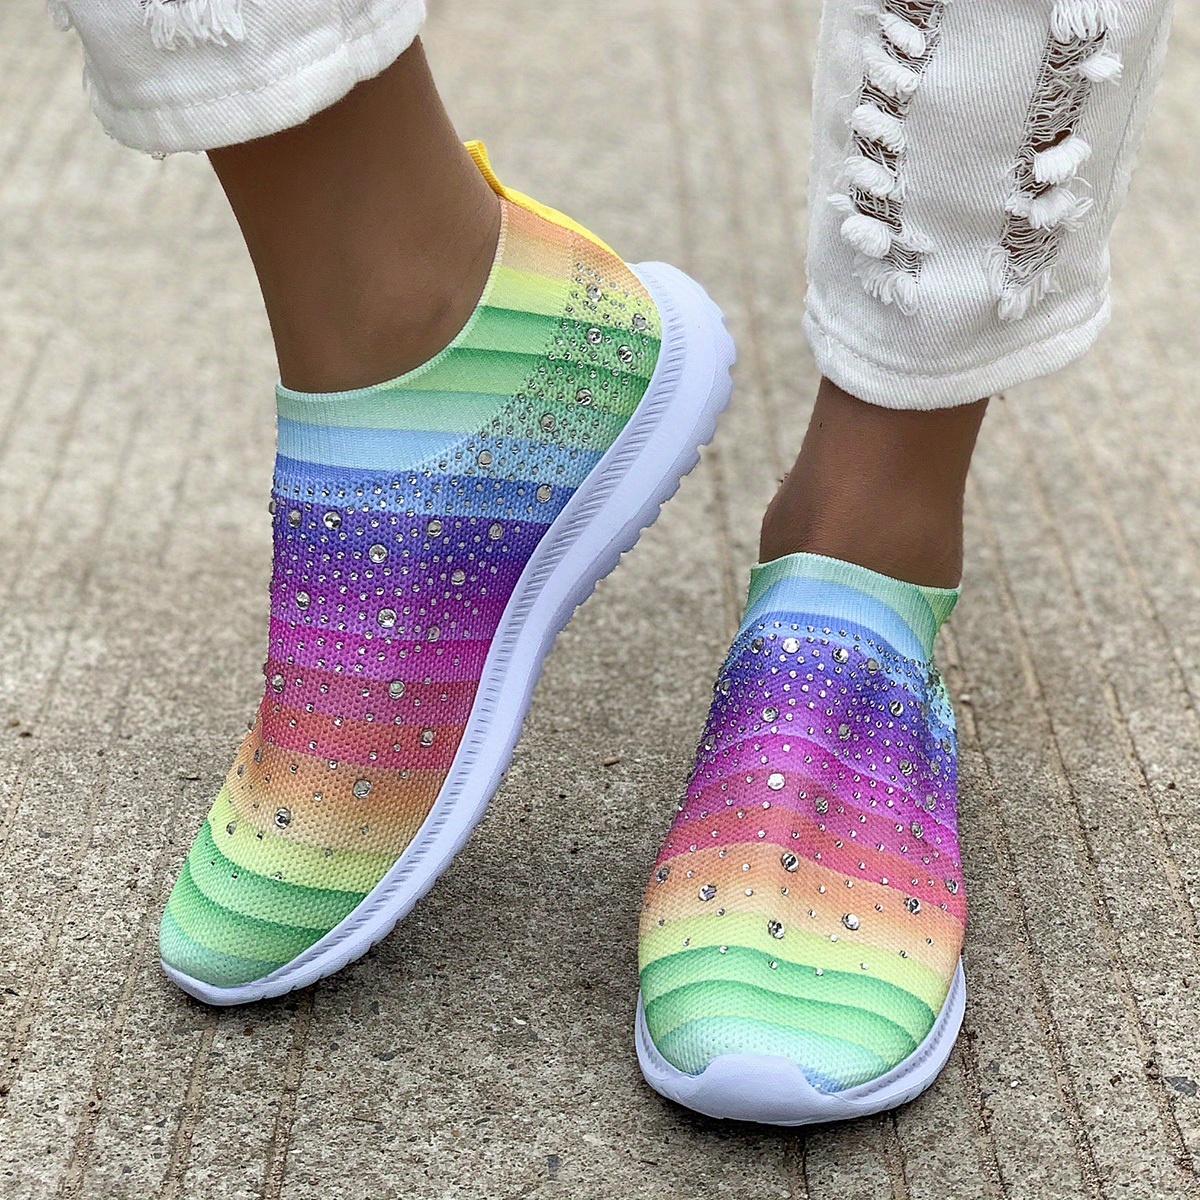 RZDYSQ Women's Rhinestones Knitted Sock Sneakers